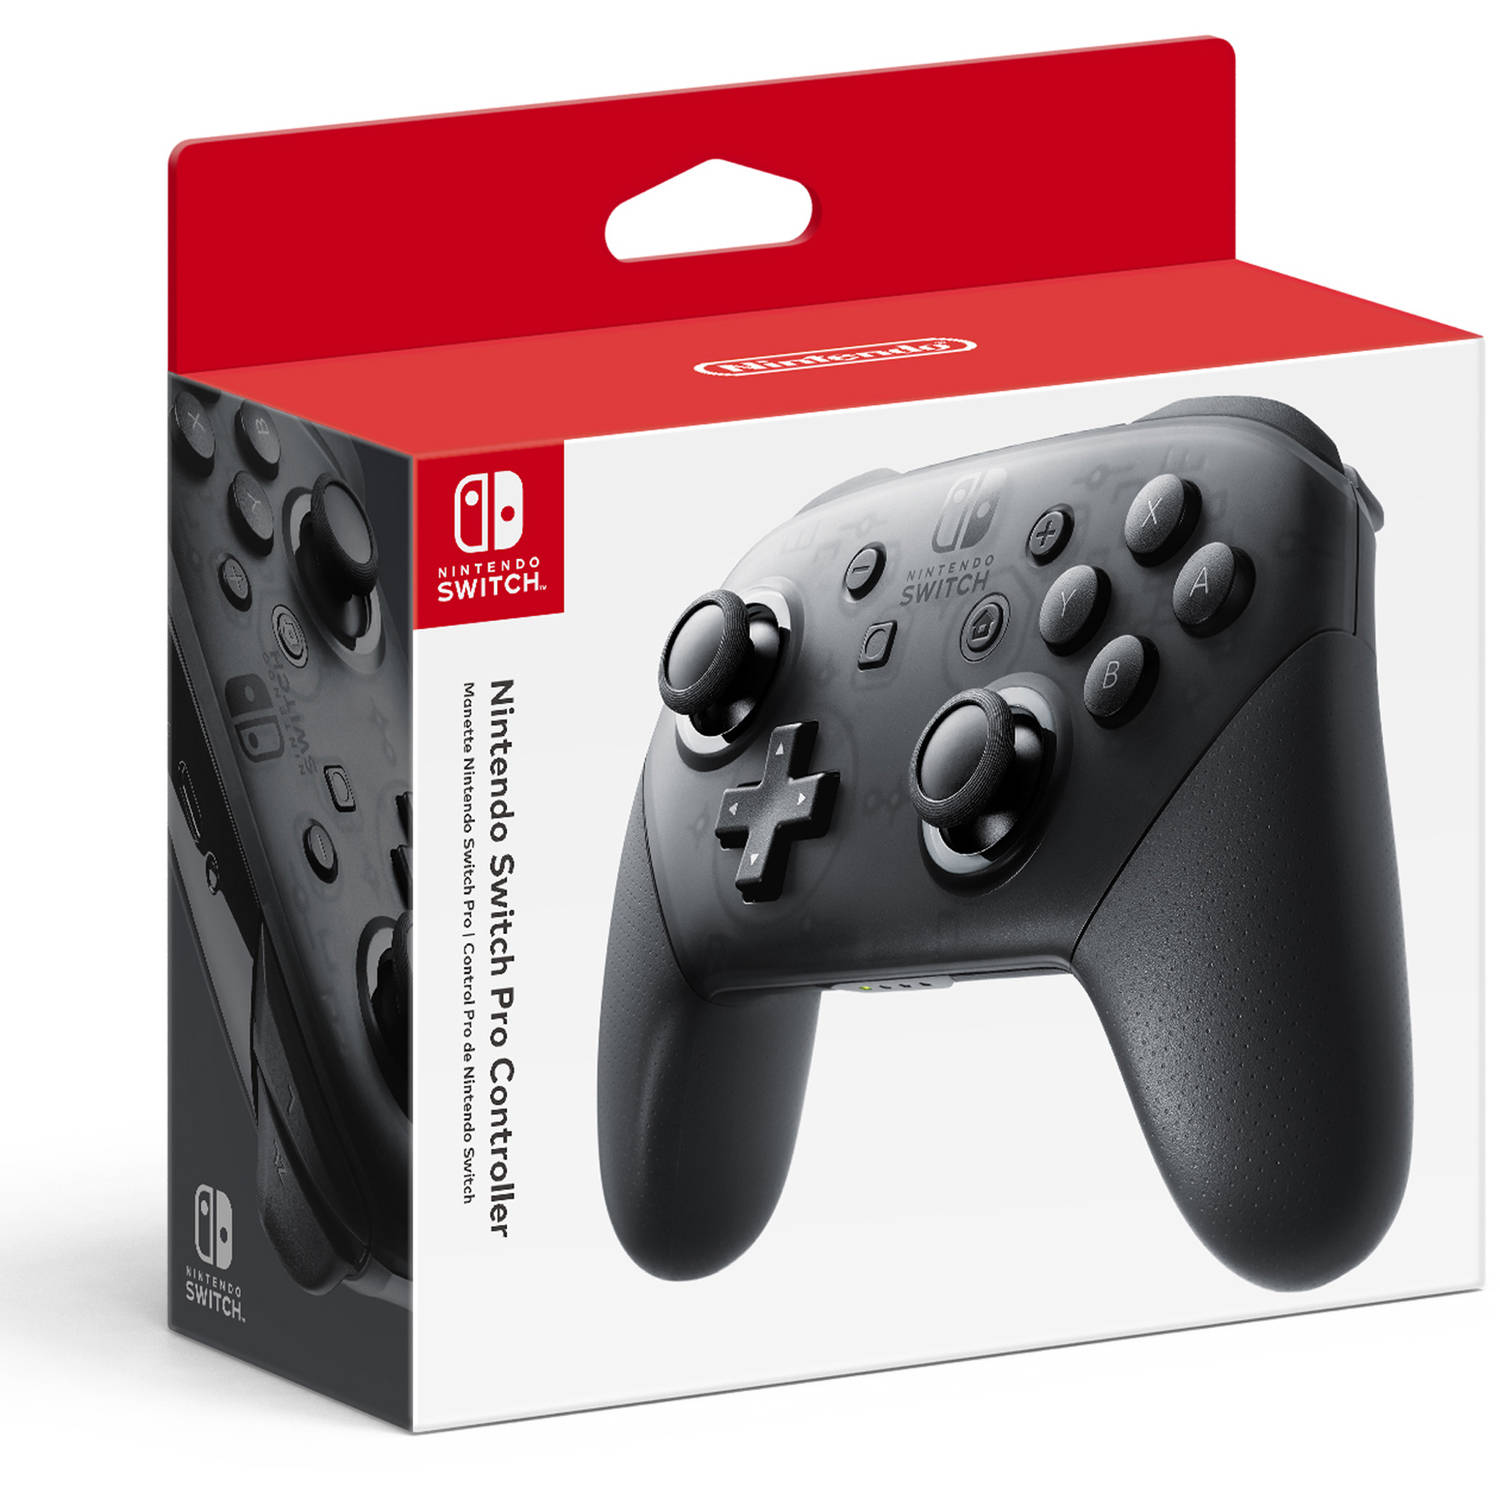 Nintendo Switch Pro Controller (Black), $49 at Walmart